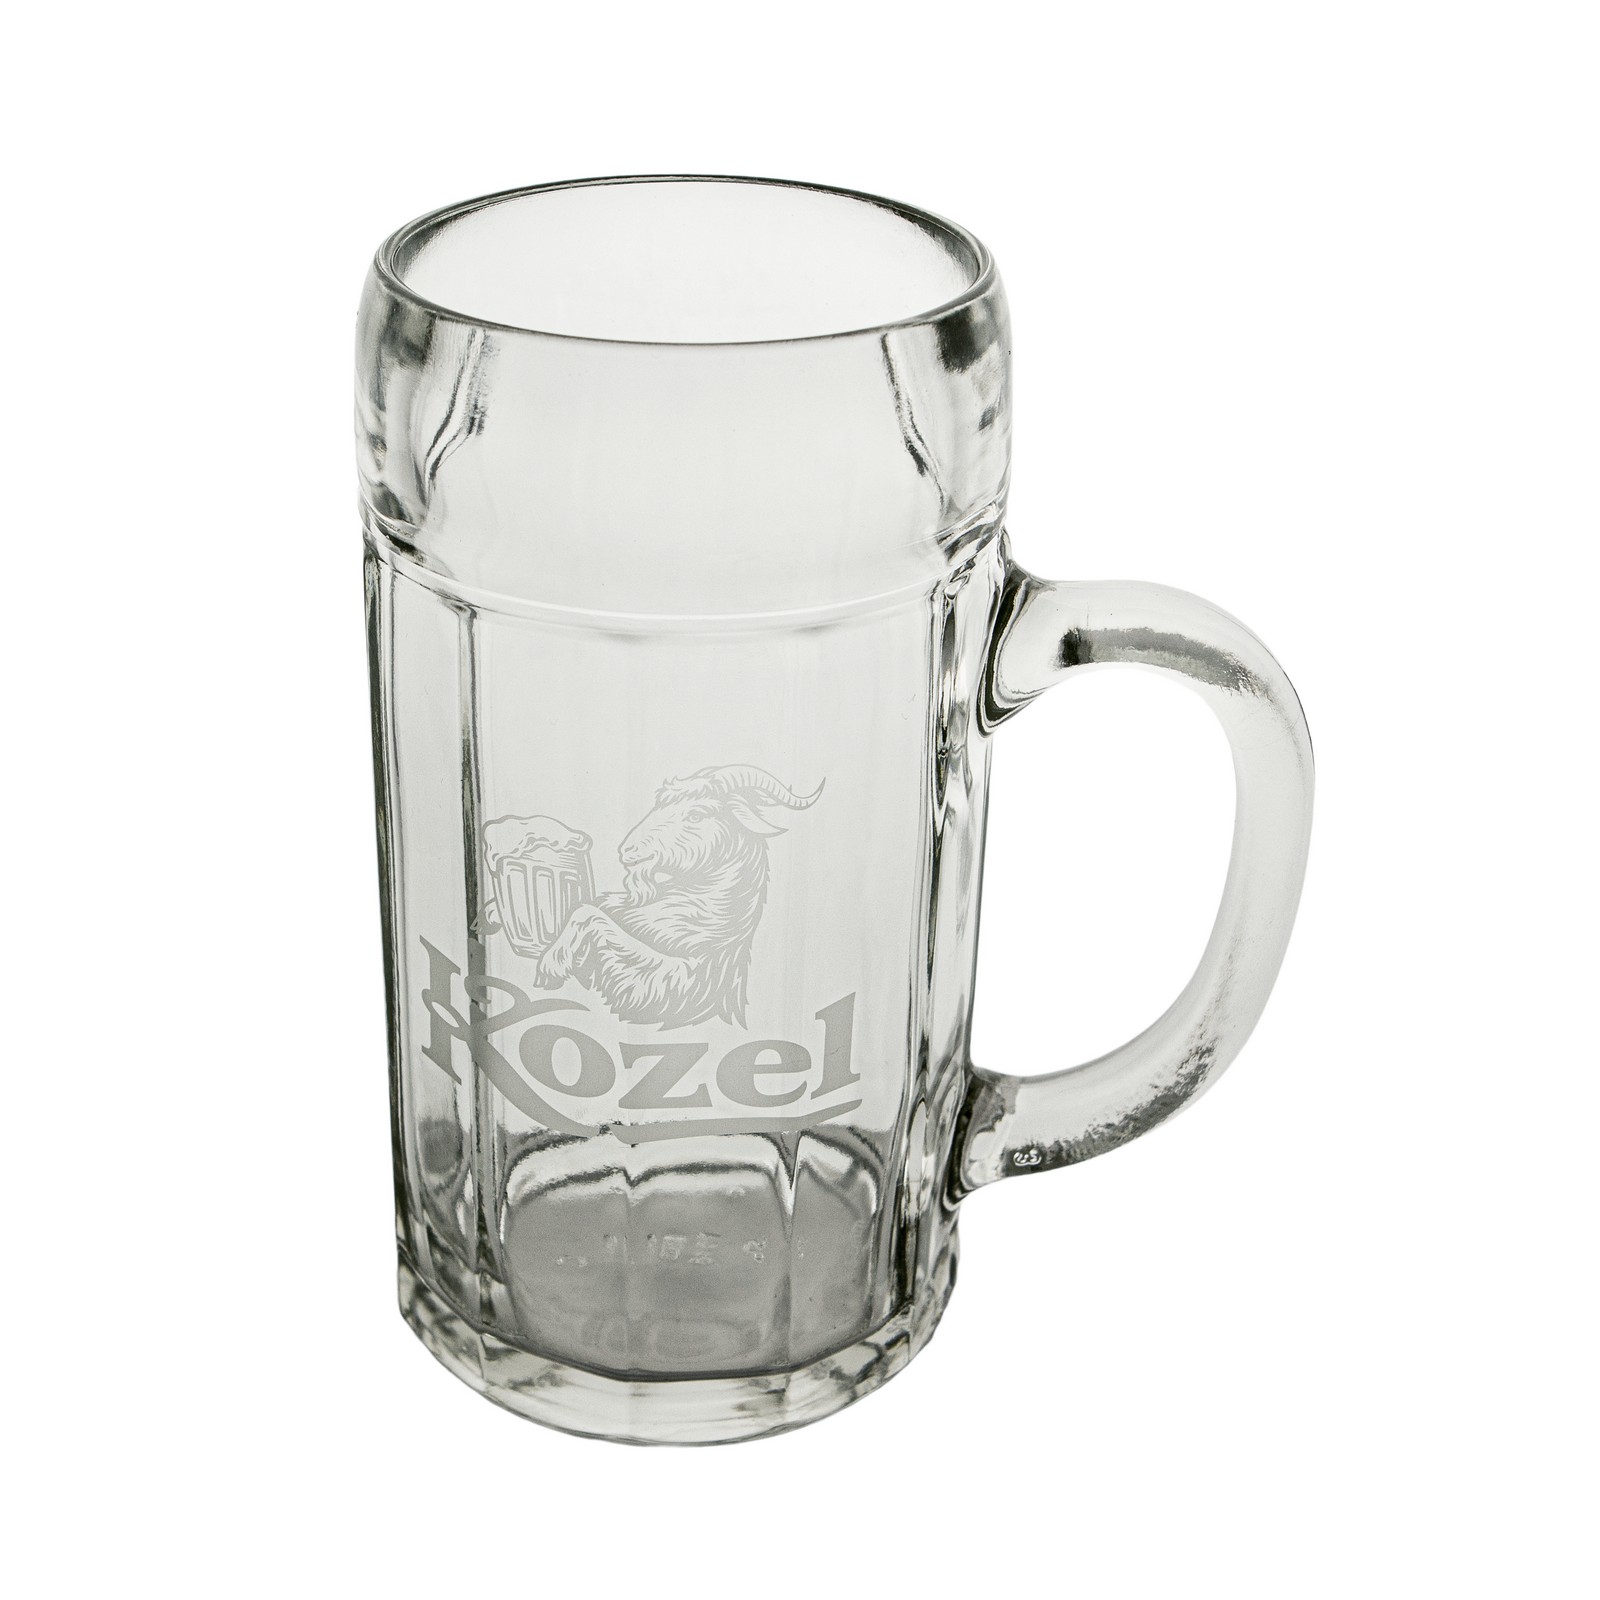 1l Kozel beer mug 5+1 free